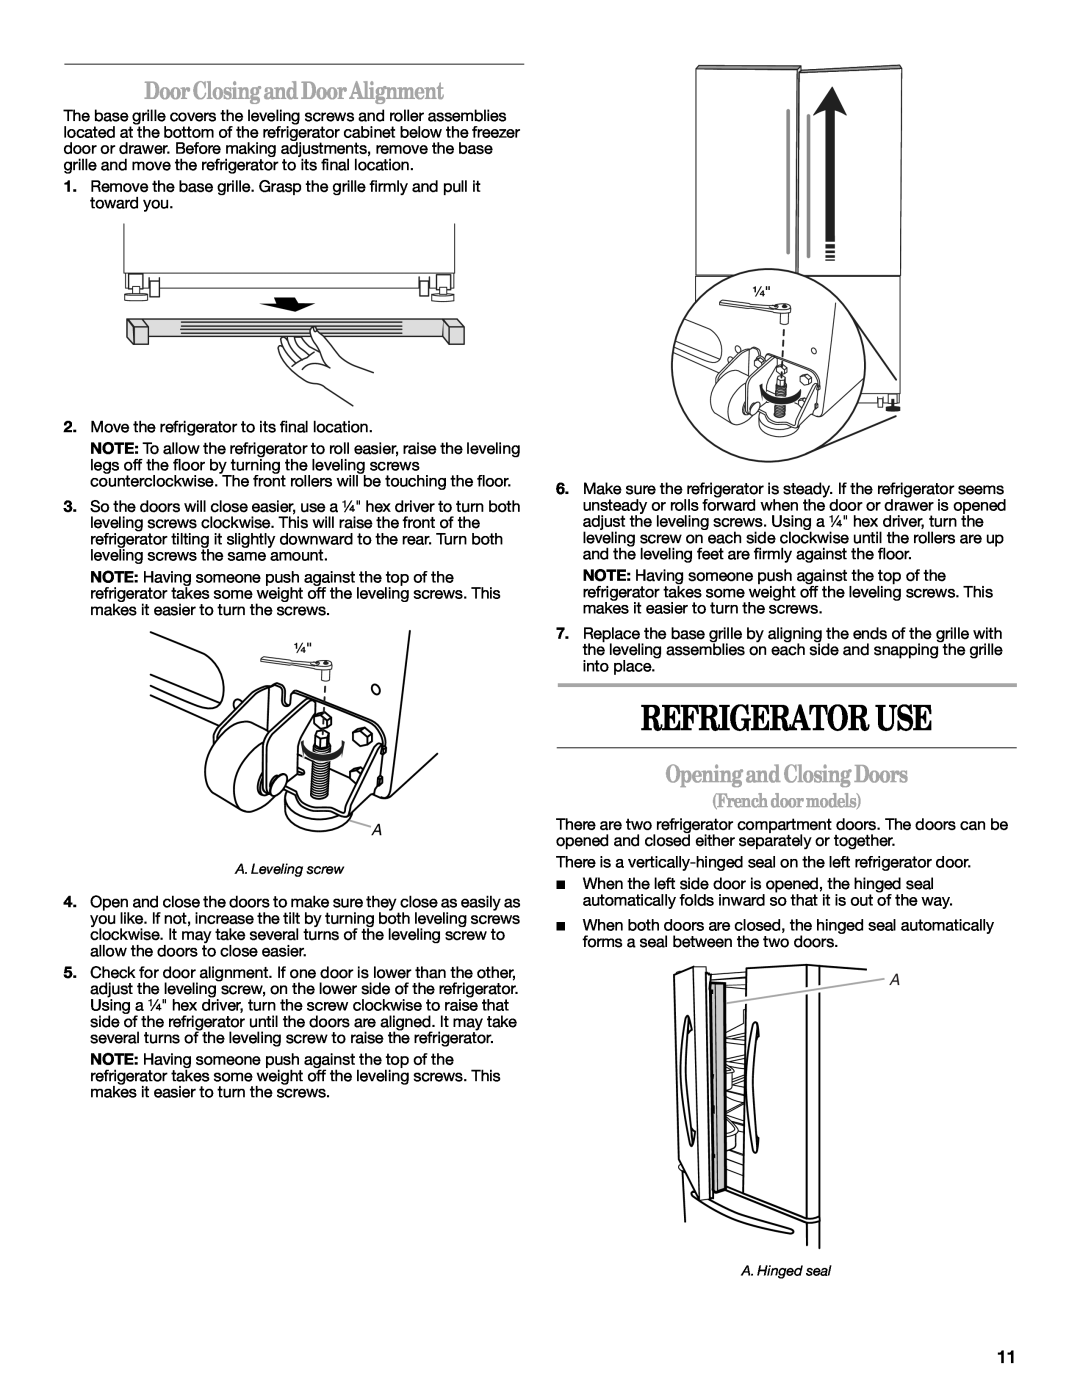 Amana W10366212A Refrigerator Use, Door Closing and Door Alignment, Opening and Closing Doors, French doormodels 